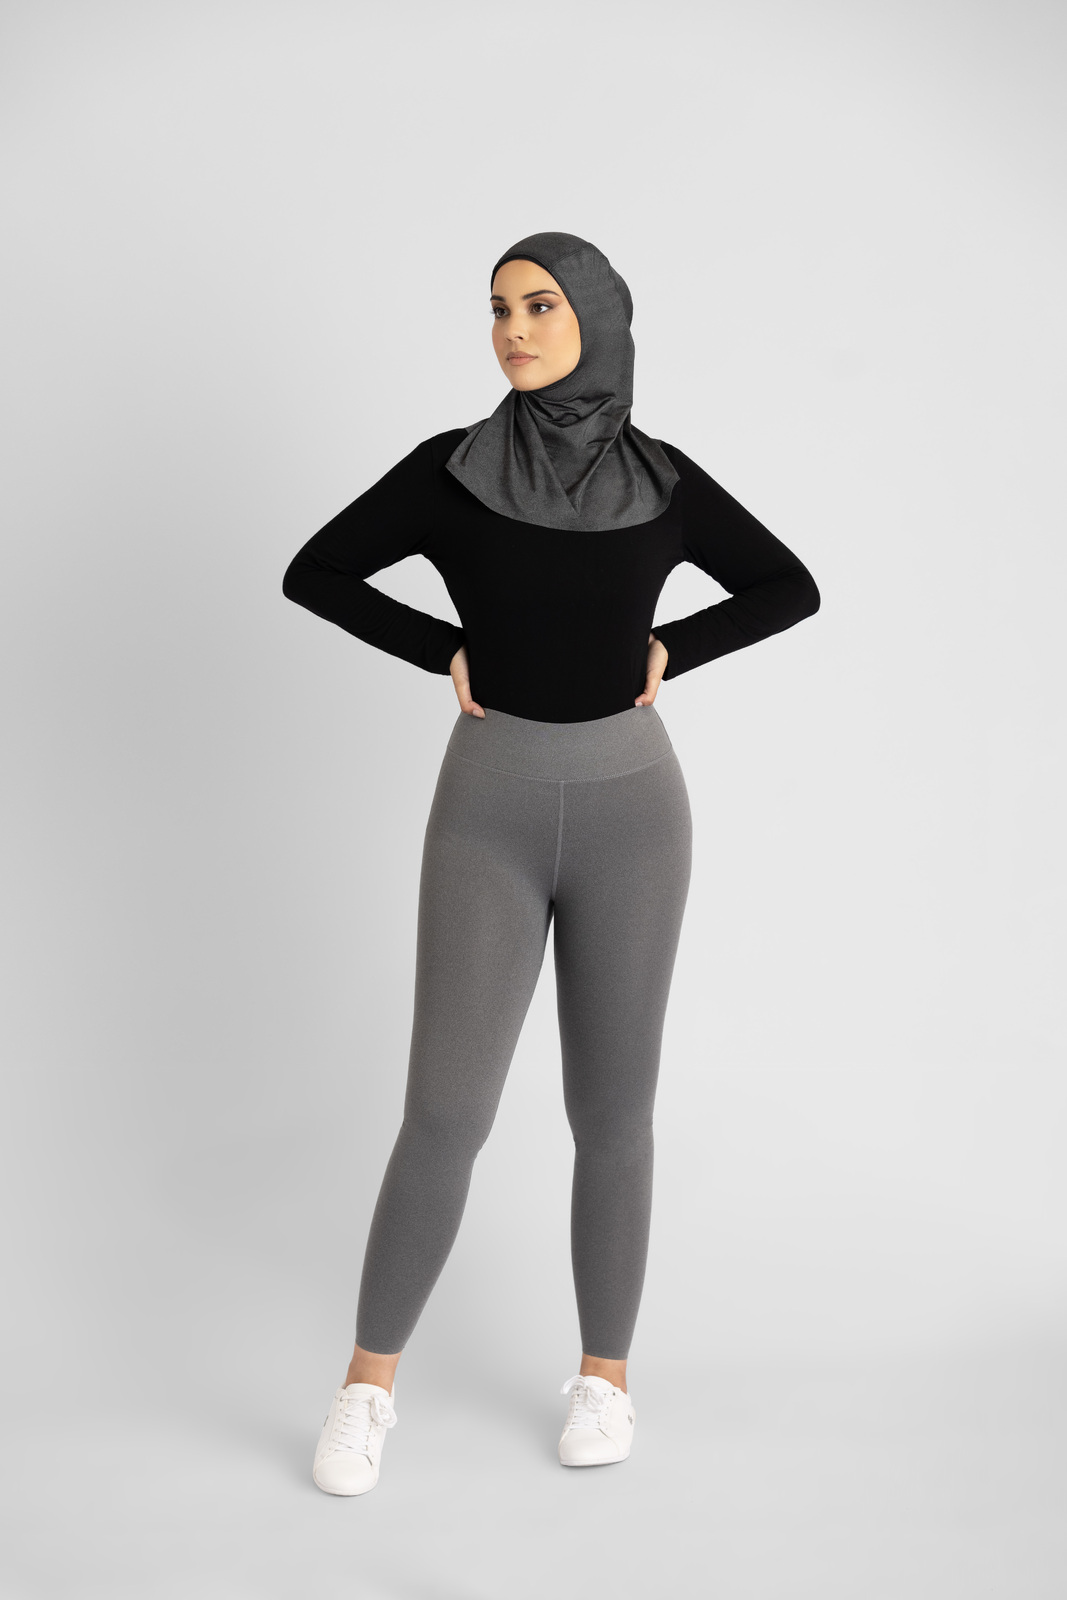 https://www.hijabhouse.com.au/assets/full/1595304.jpg?20221229223401